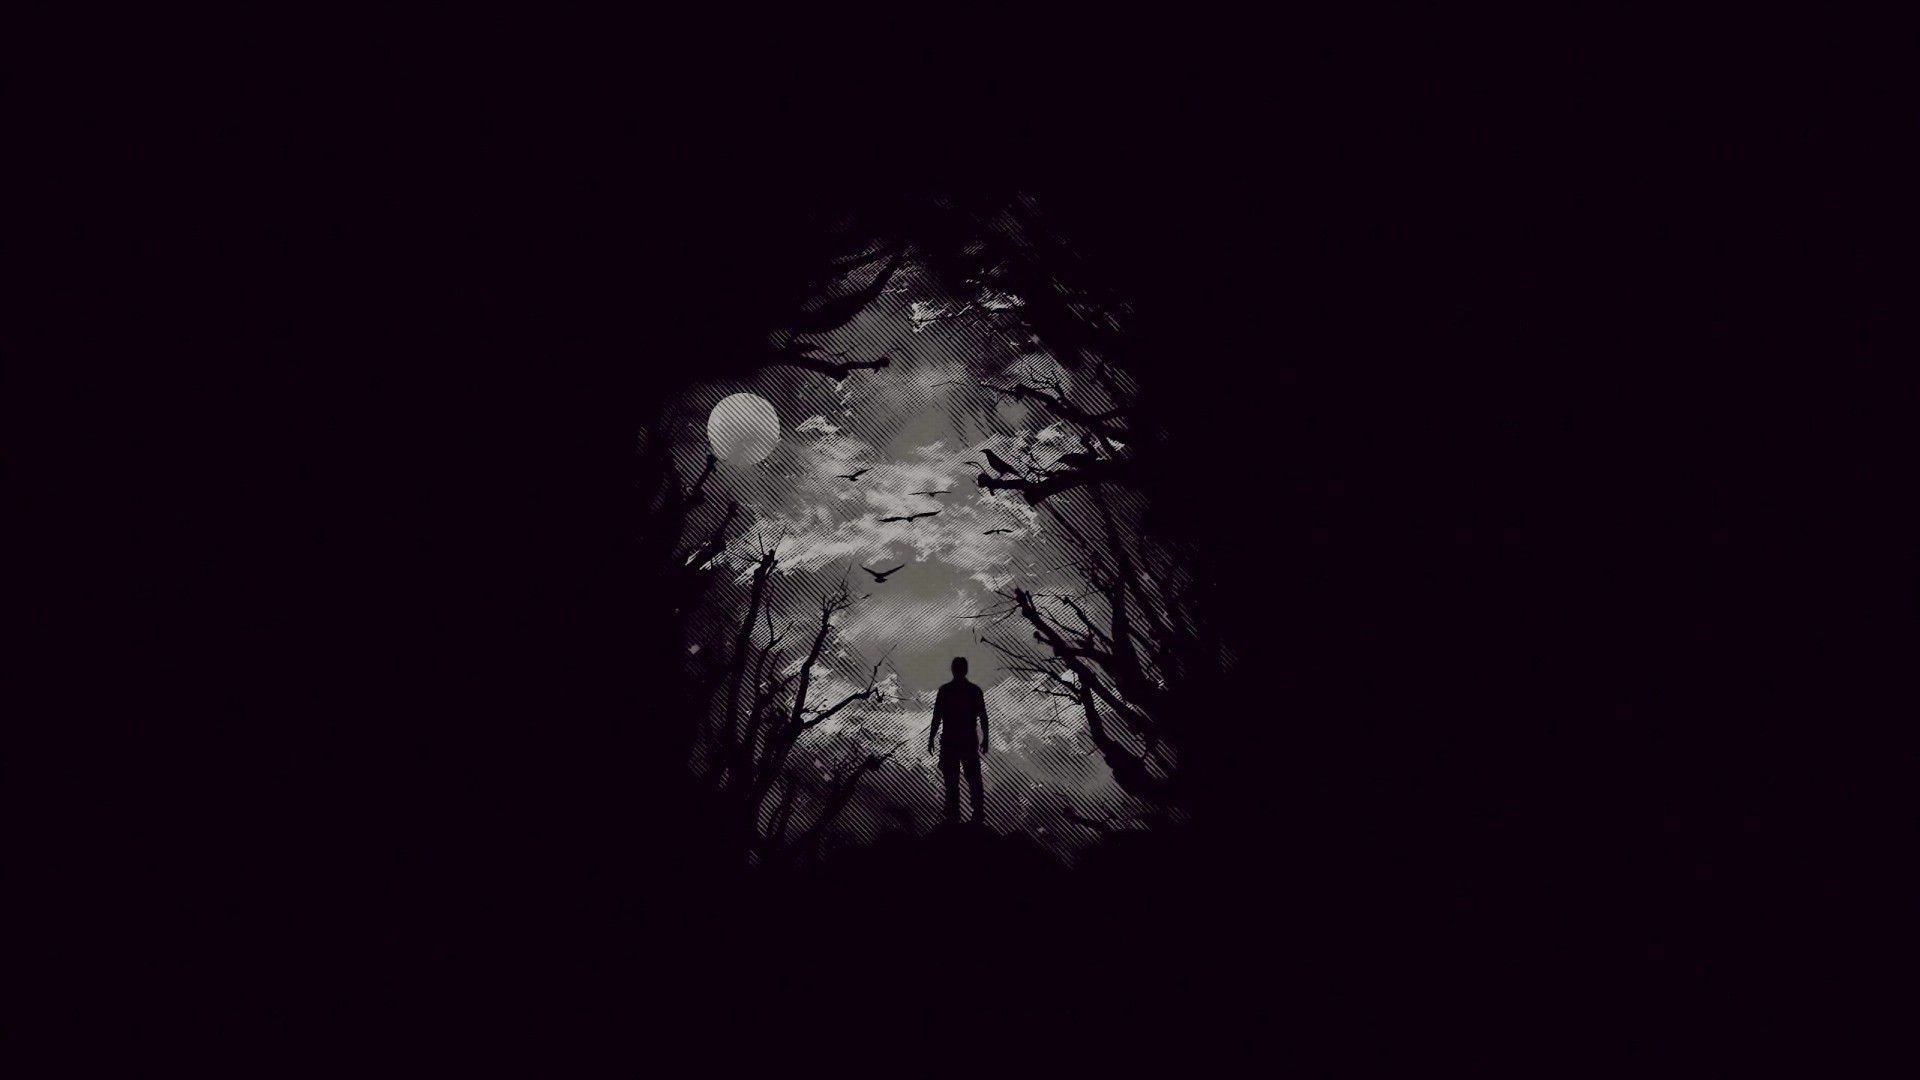 Alone in the dark the new nightmare wallpaper 1920 × 1080